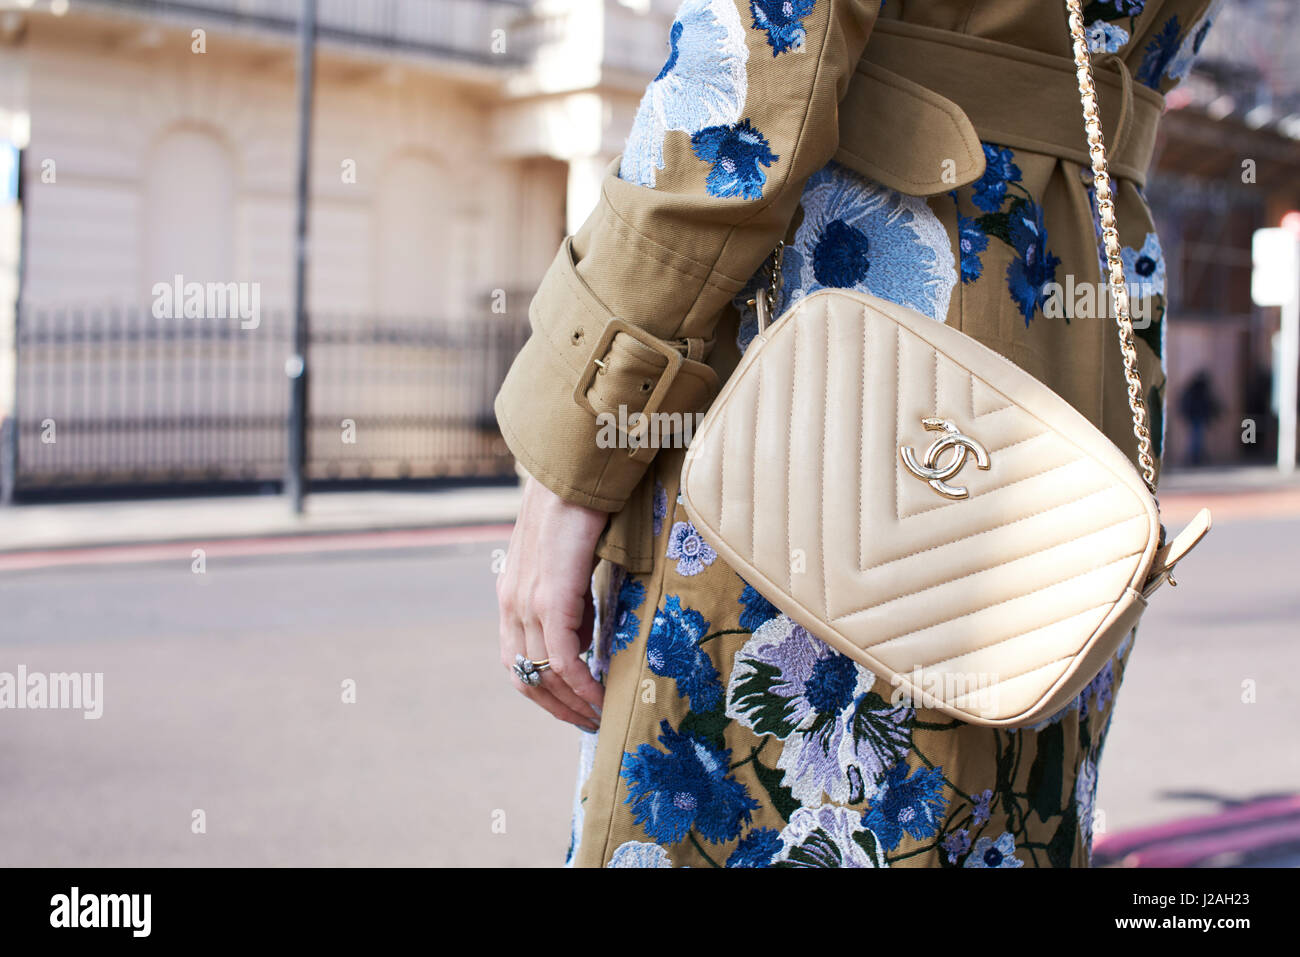 Chanel Laptop Case  Bags, Chanel bag, Fashion bags